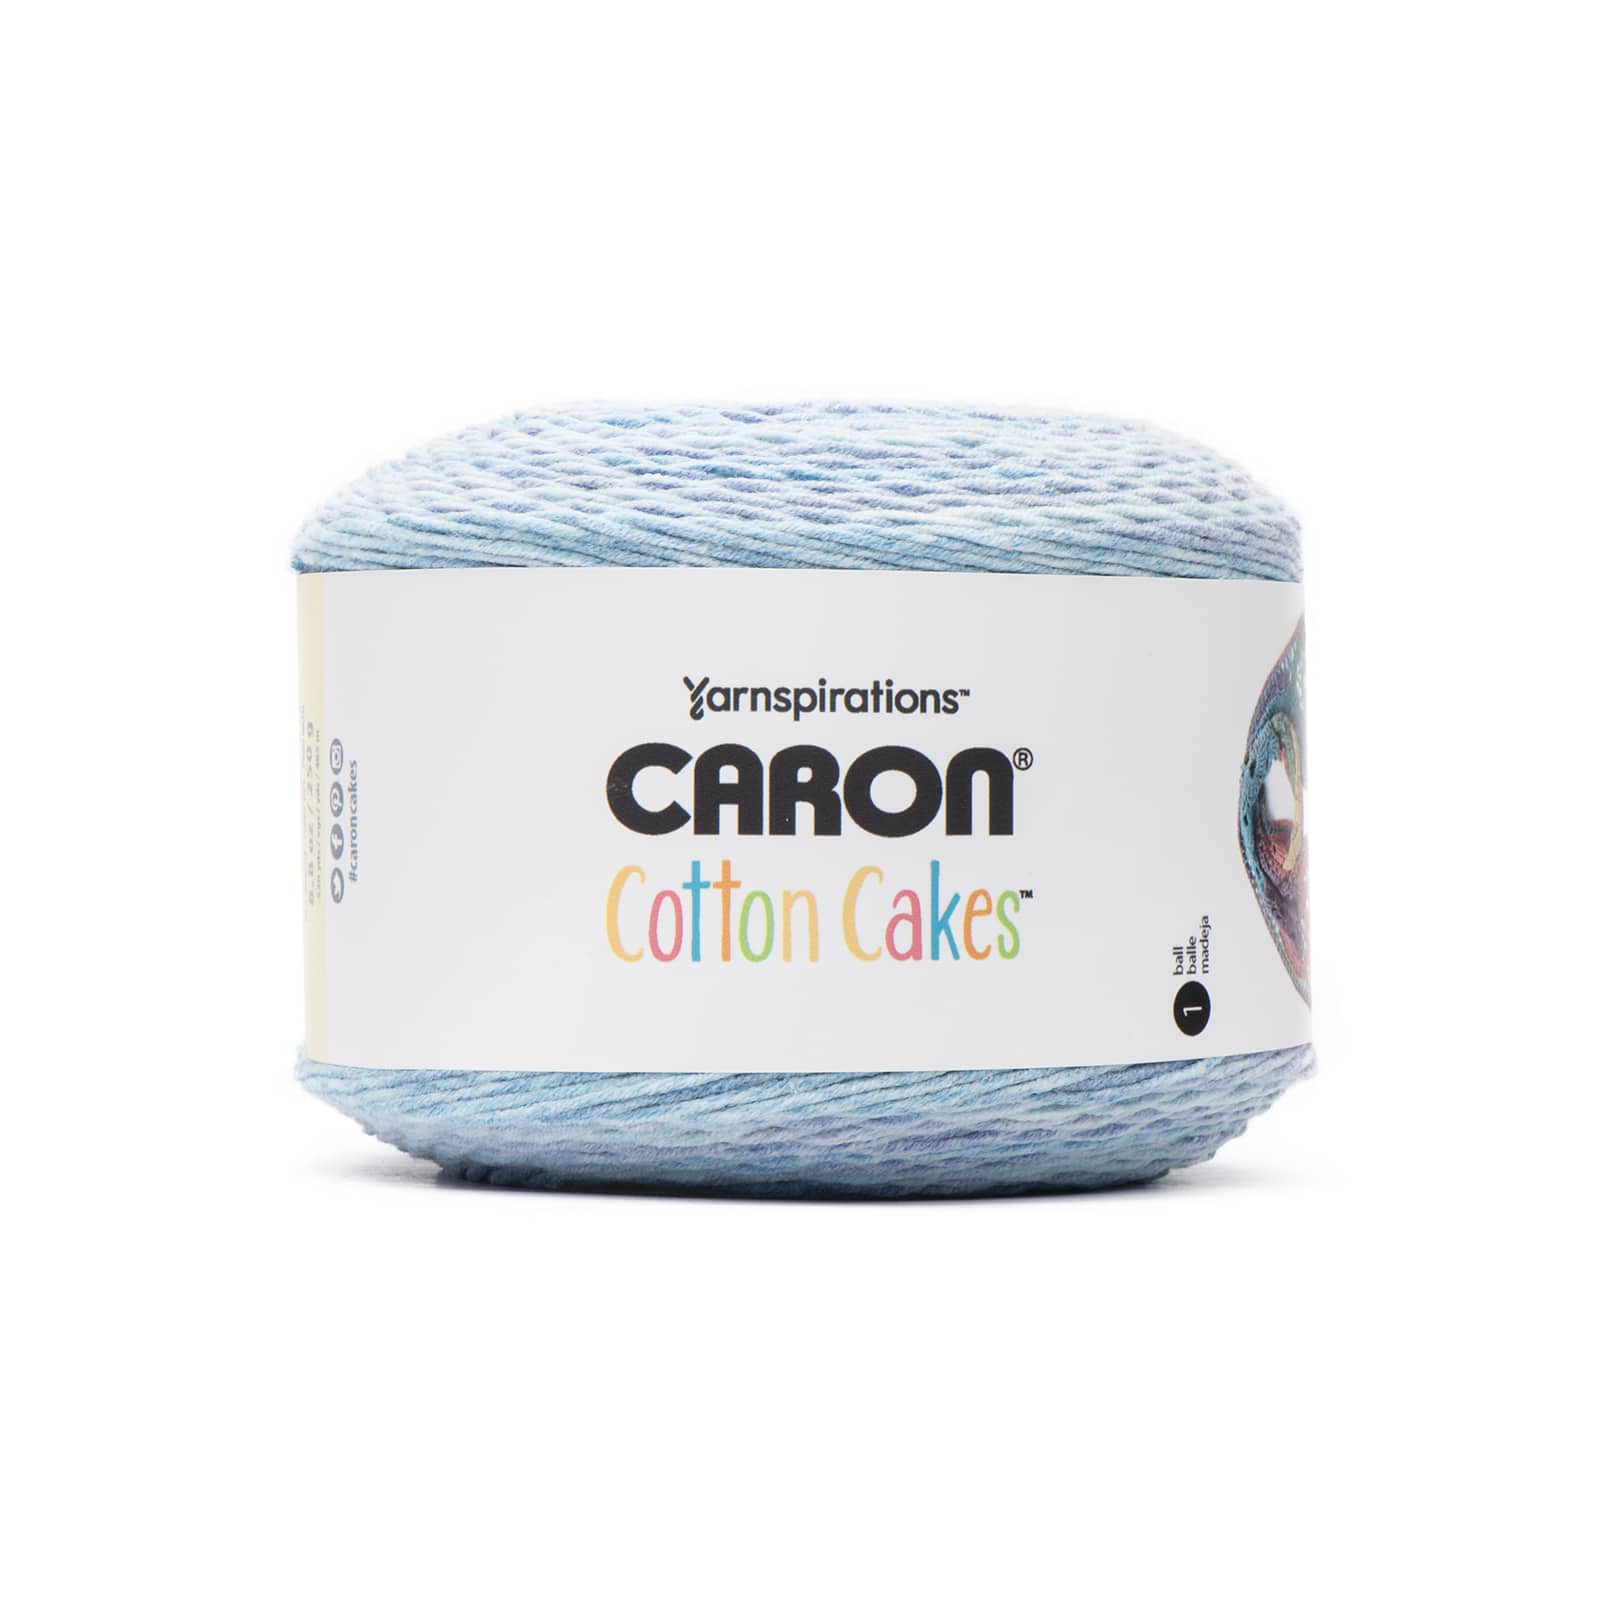 Caron Cakes Yarn - Clearance Shades*